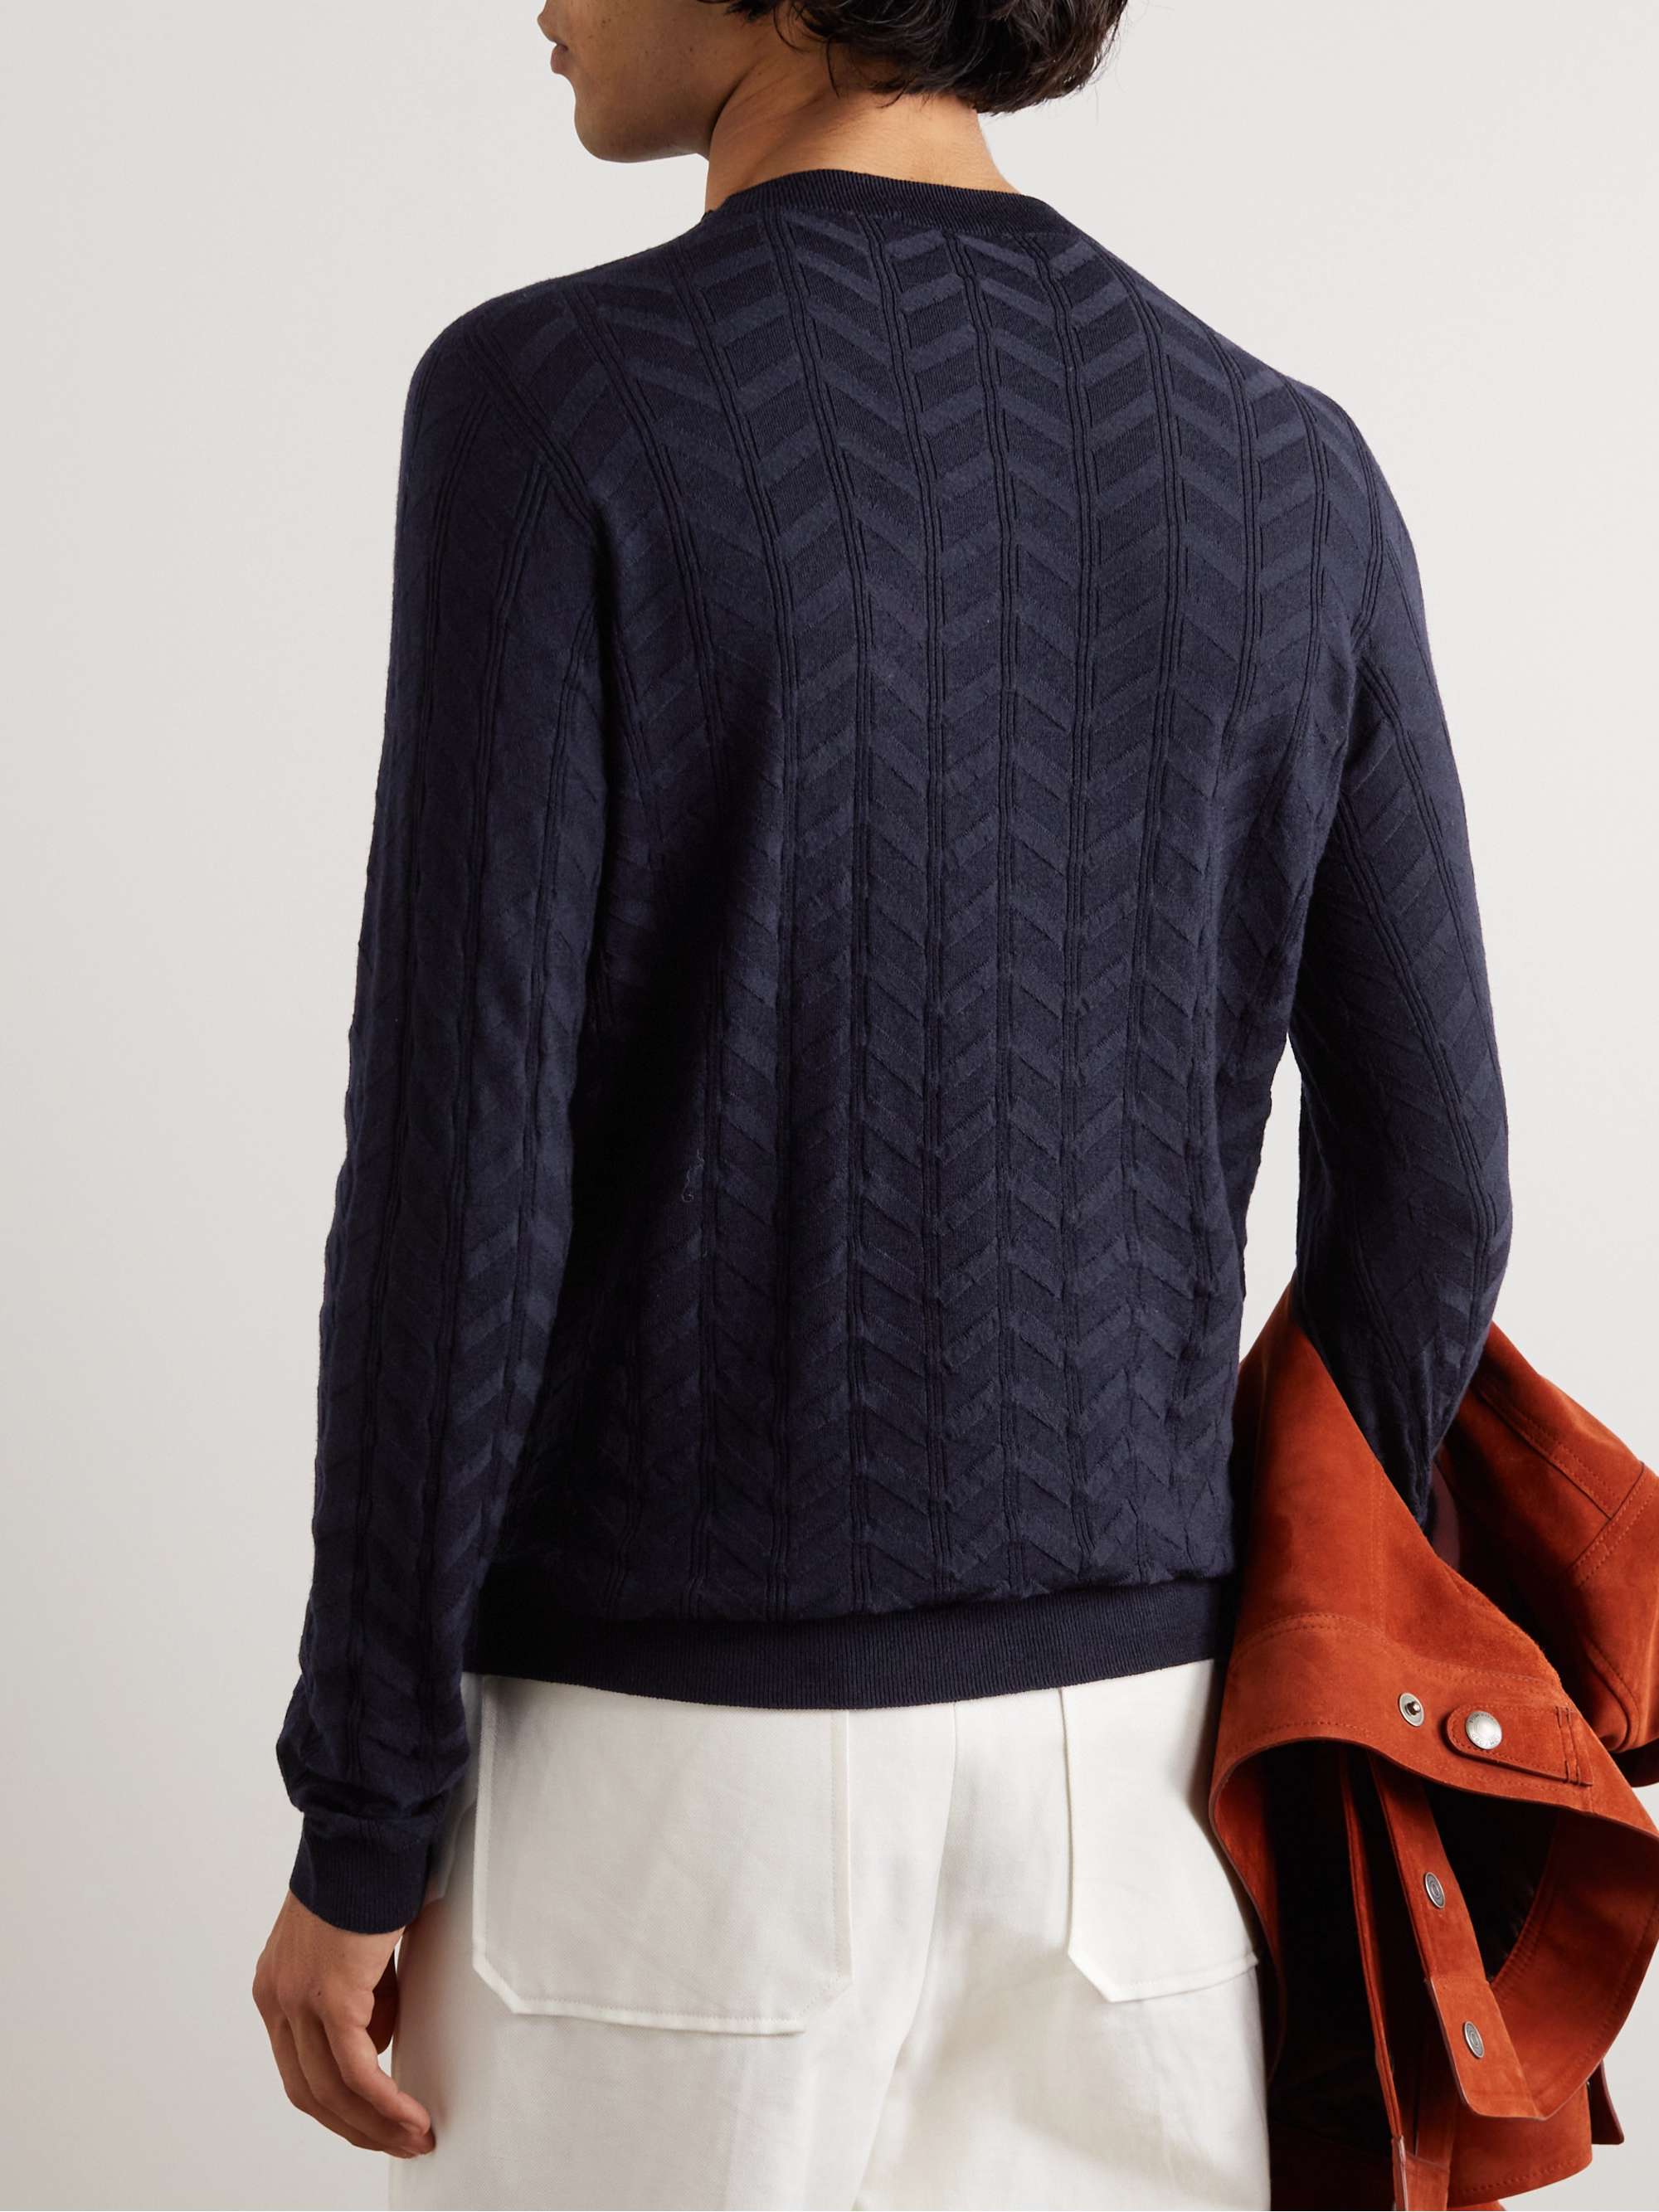 GIORGIO ARMANI Slim-Fit Jacquard-Knit Wool-Blend Sweater